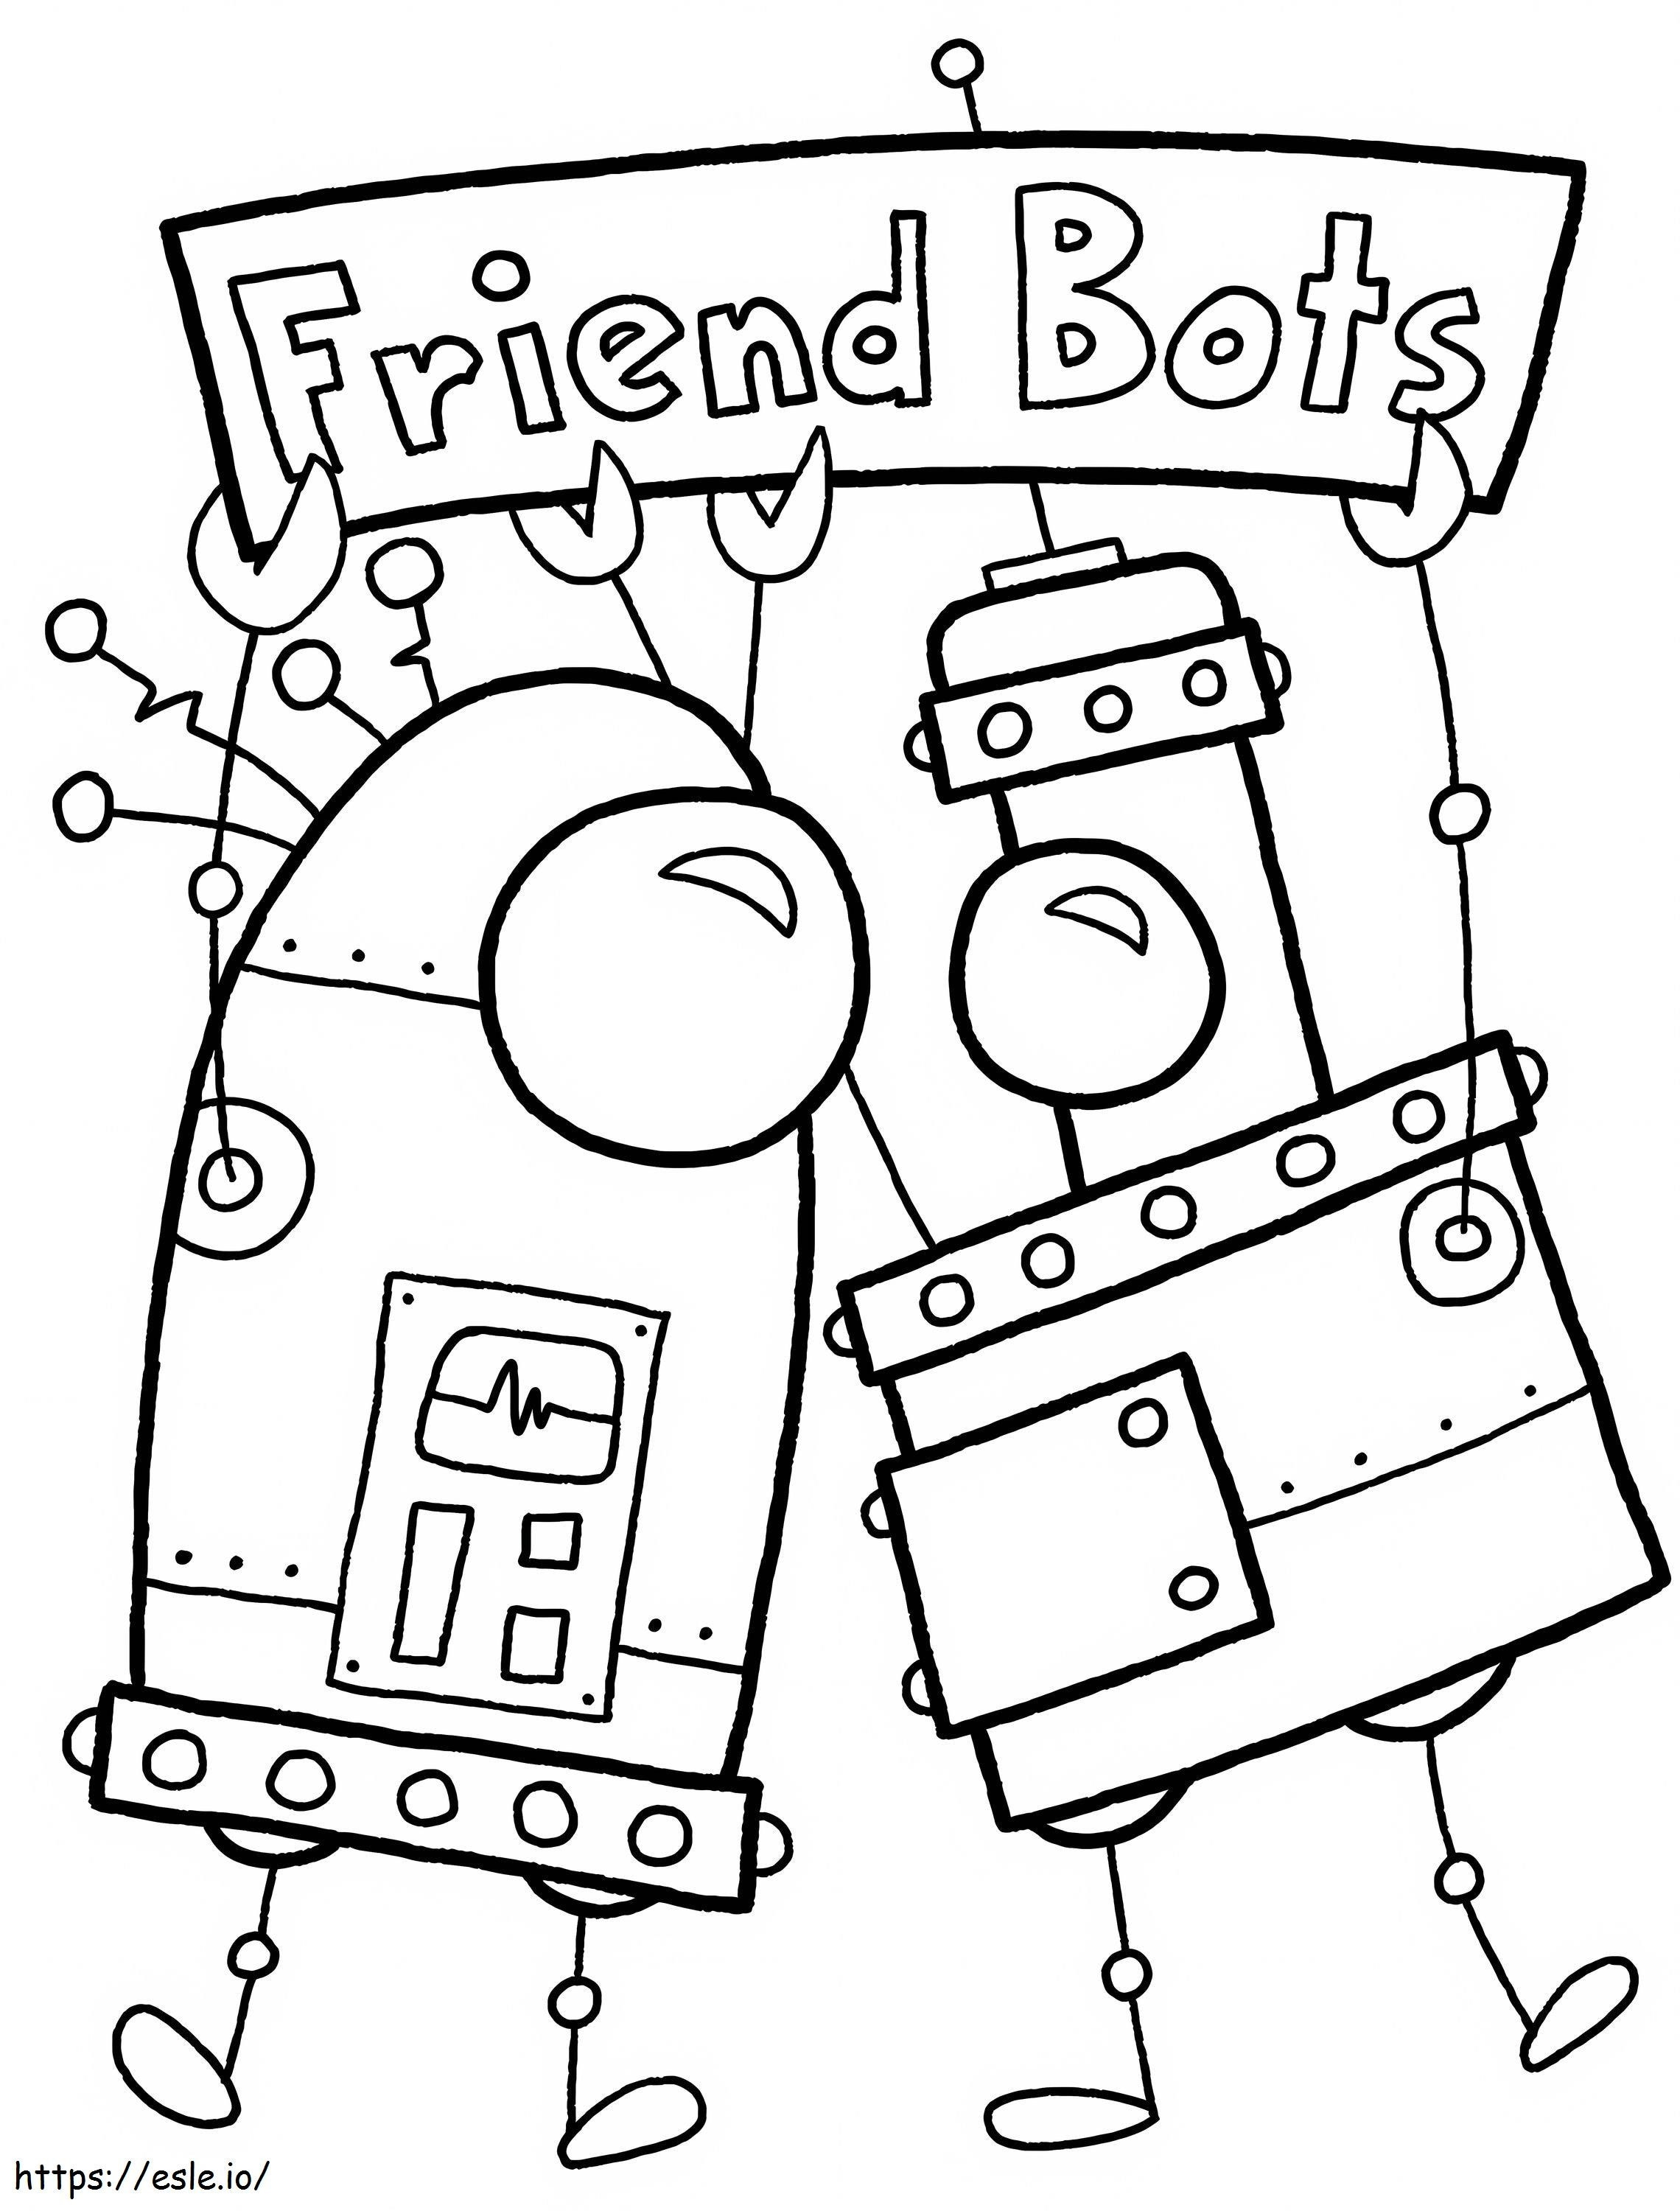 Friend Bots coloring page